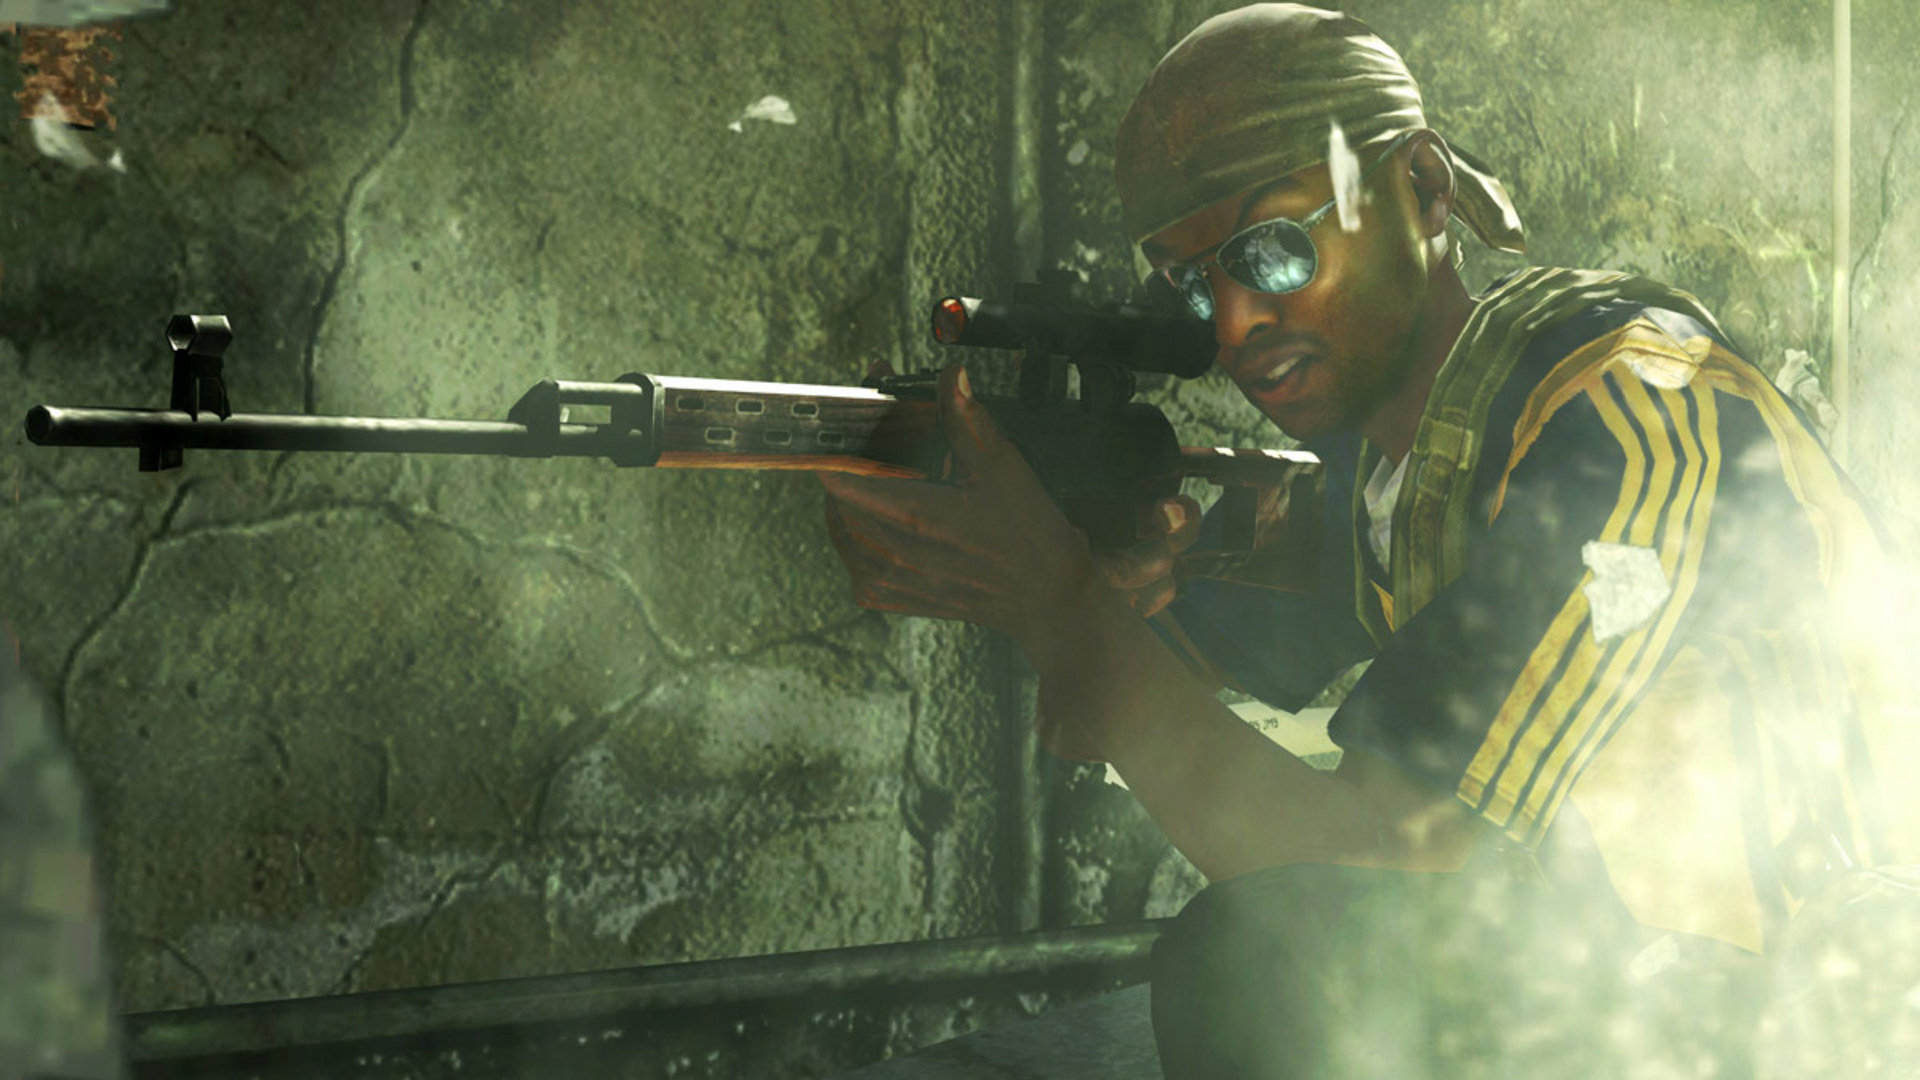 Call of Duty®: Modern Warfare® 2 (2009) on Steam